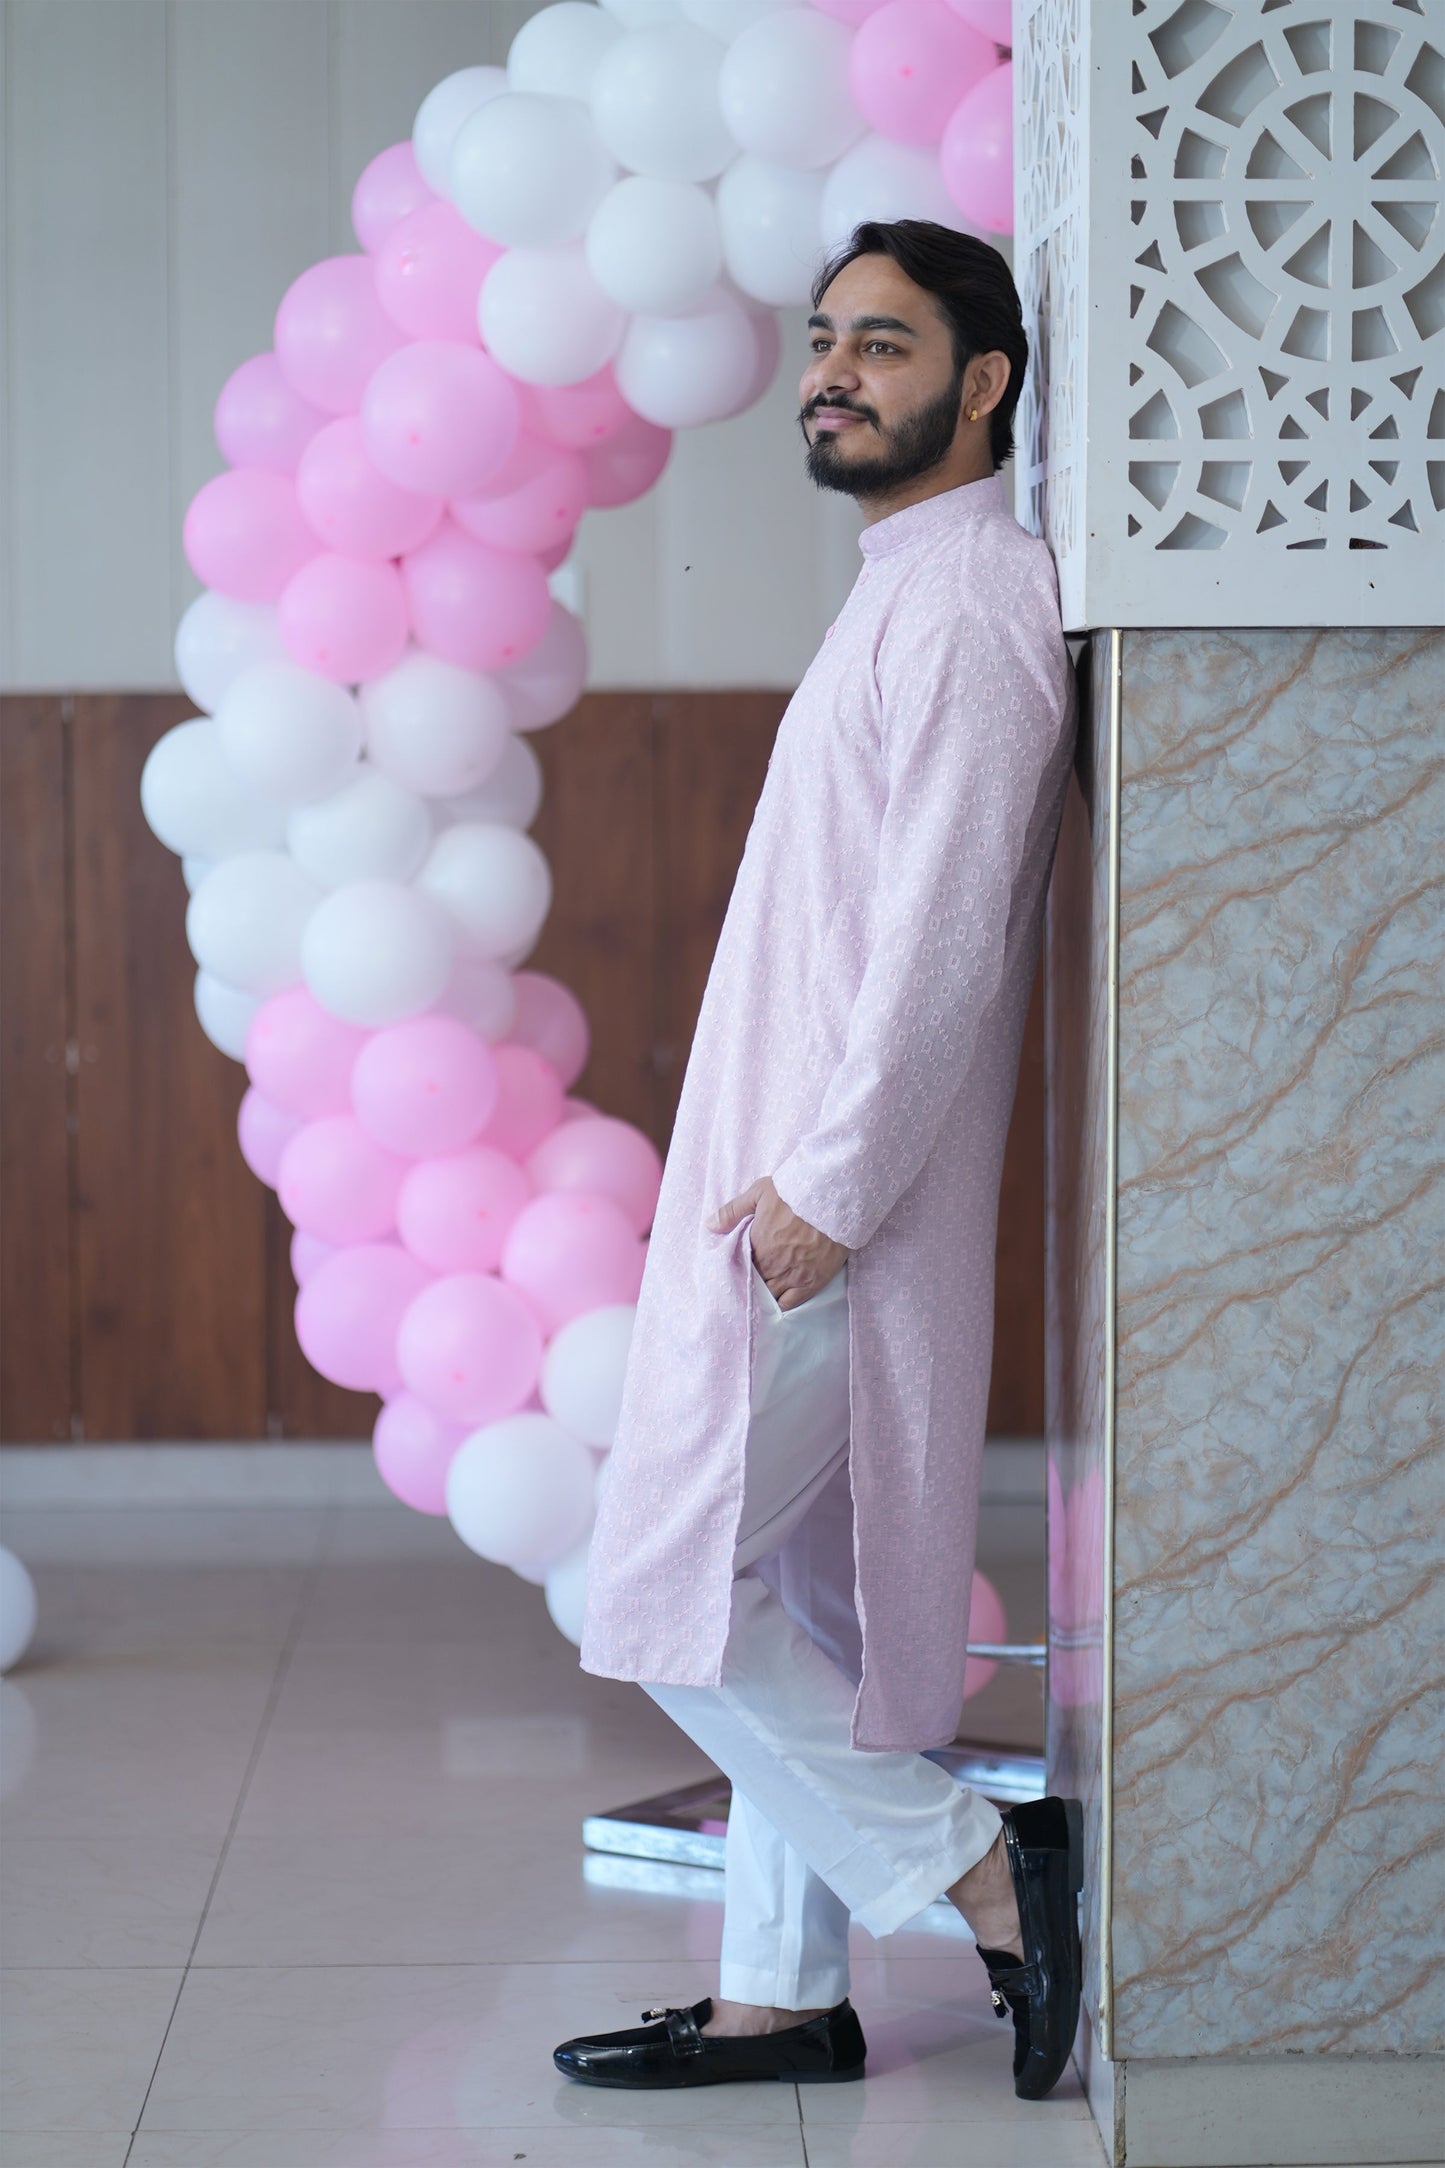 Kurta Pajama For Men